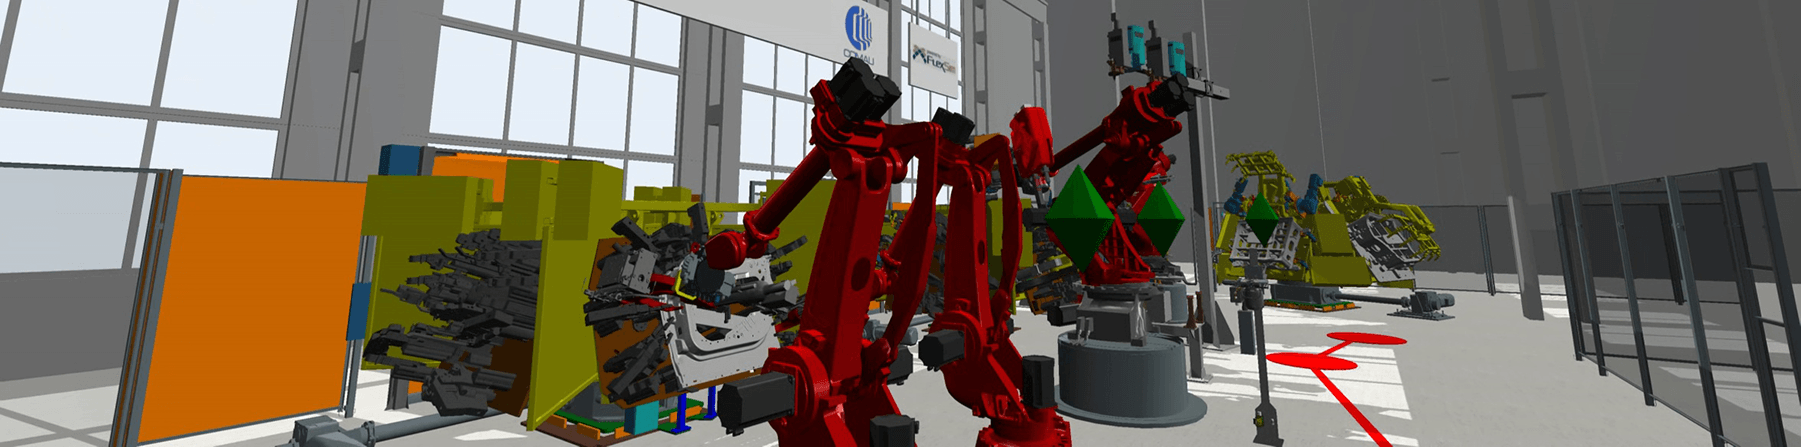 FlexSim digital twin robotics assembly